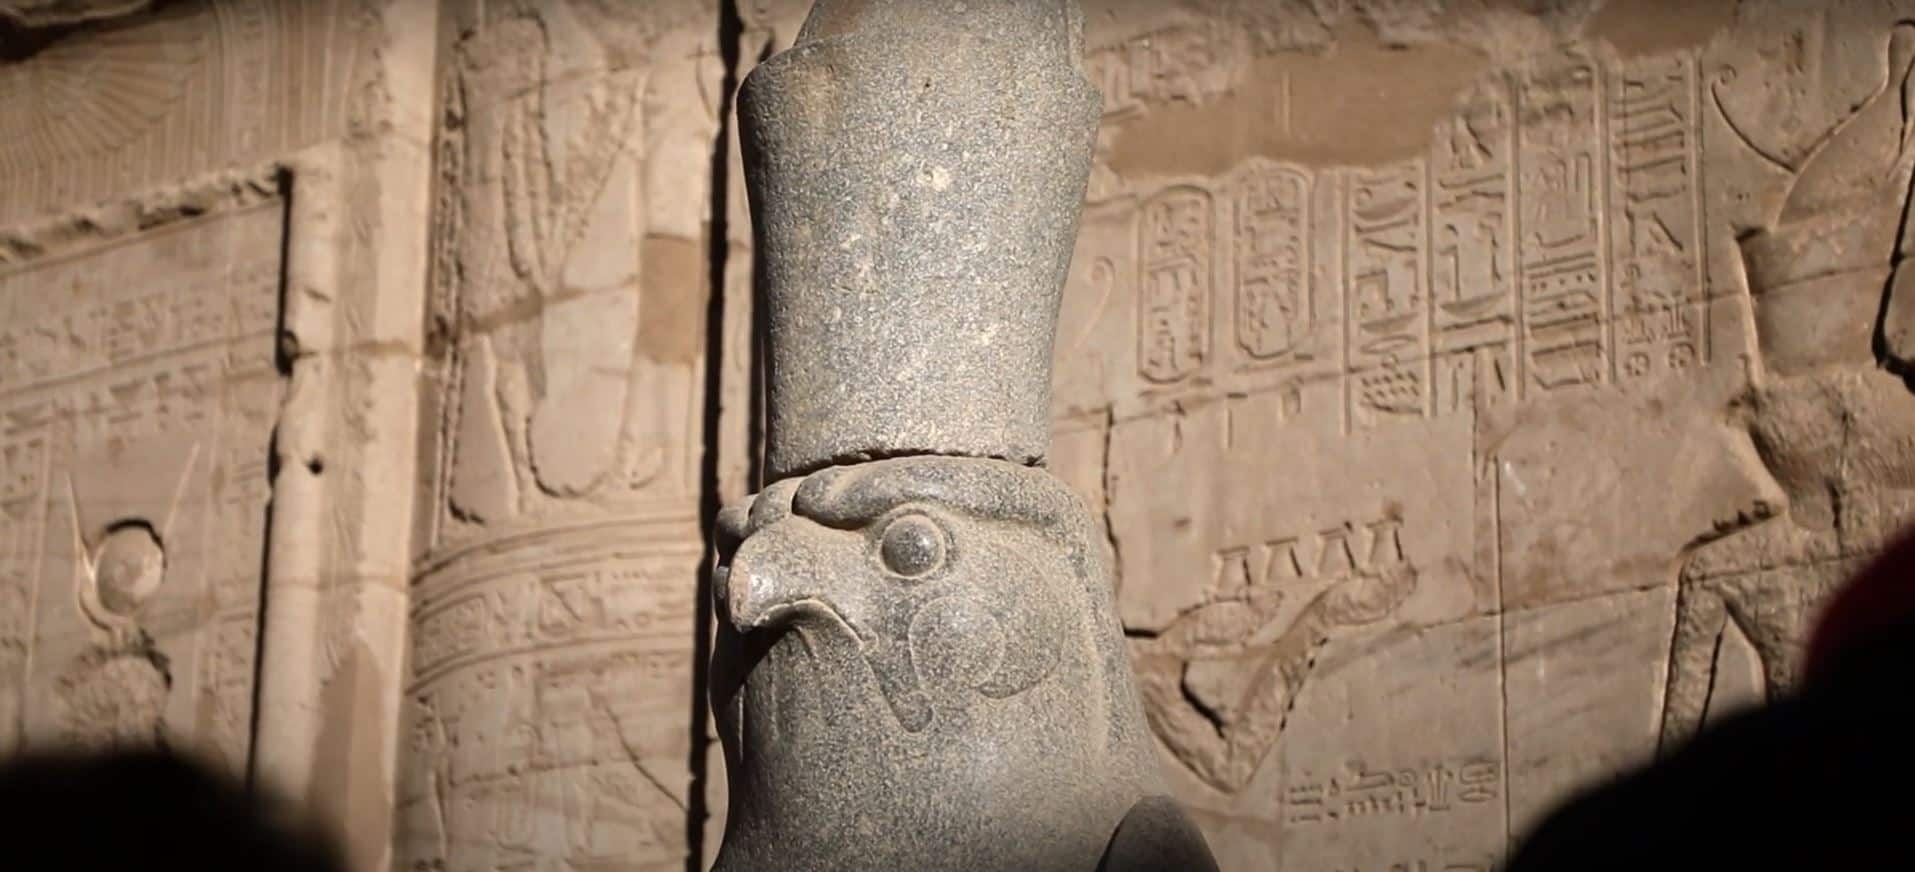 The Temple of Edfu -Temple of Horus - Aswan - Egypt